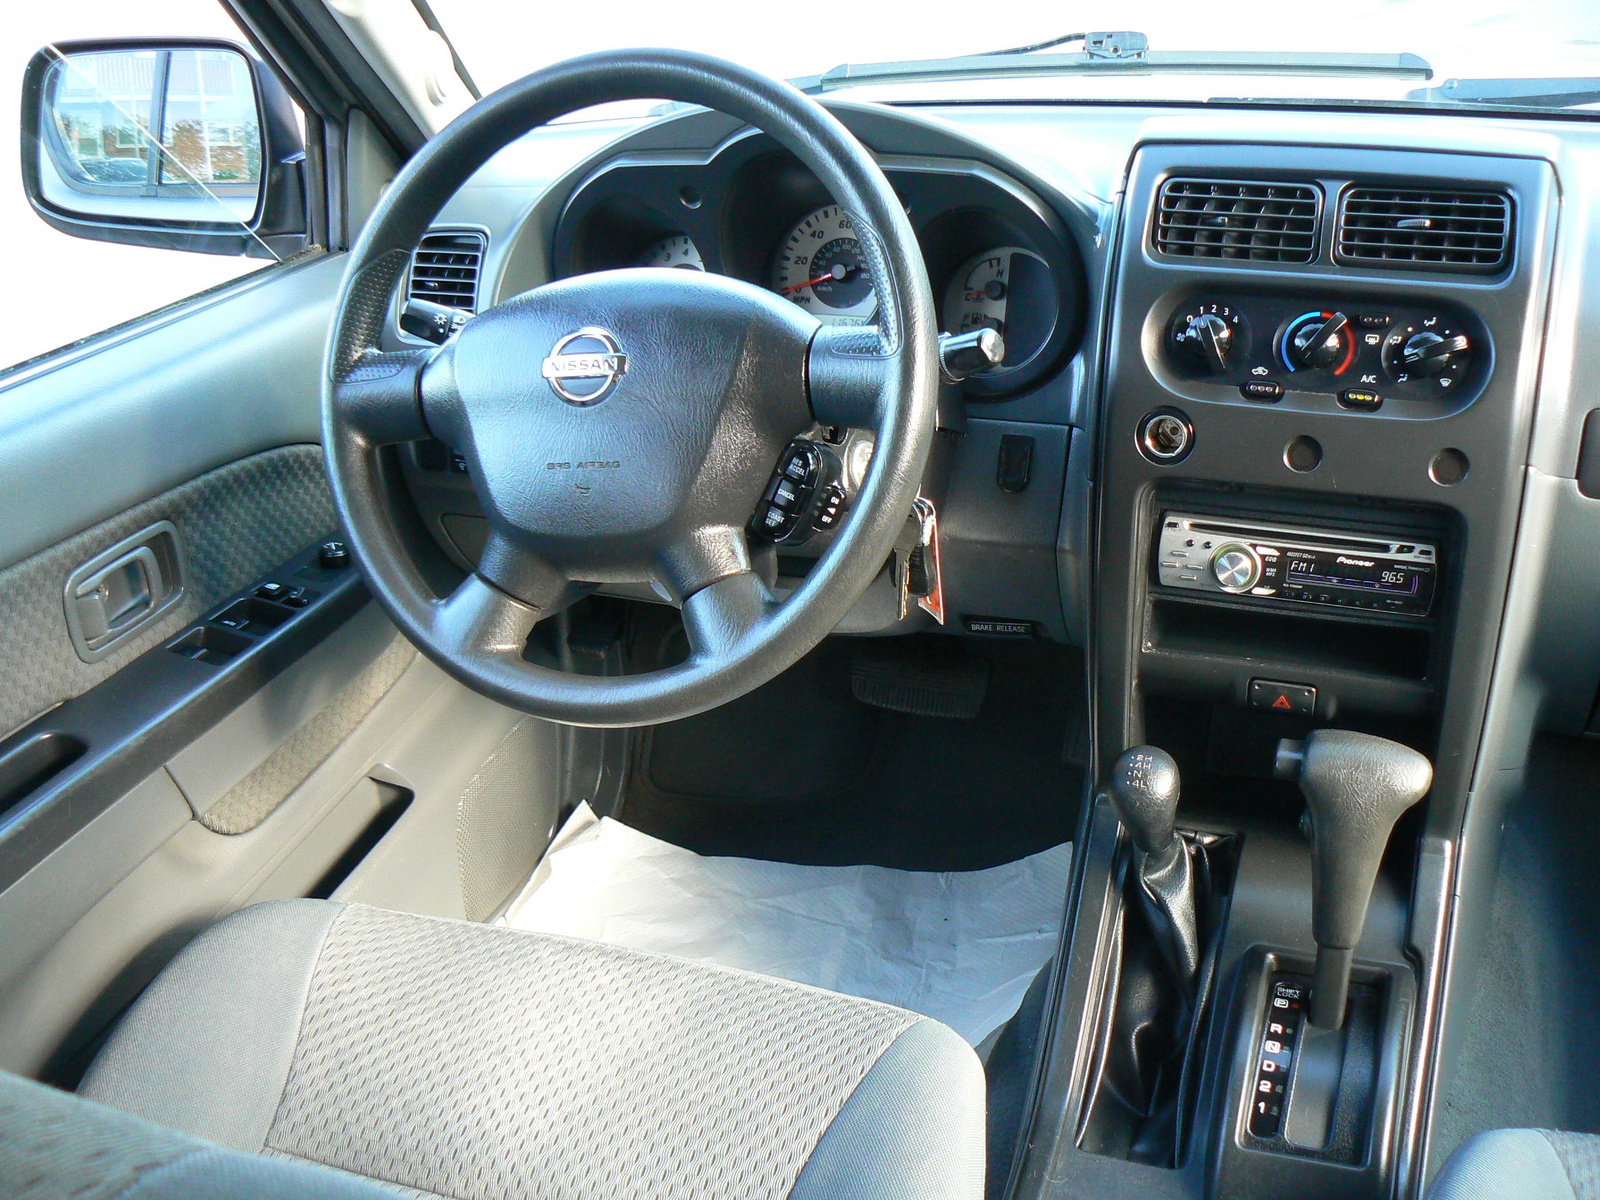 2004 Nissan xterra interior dimensions #5